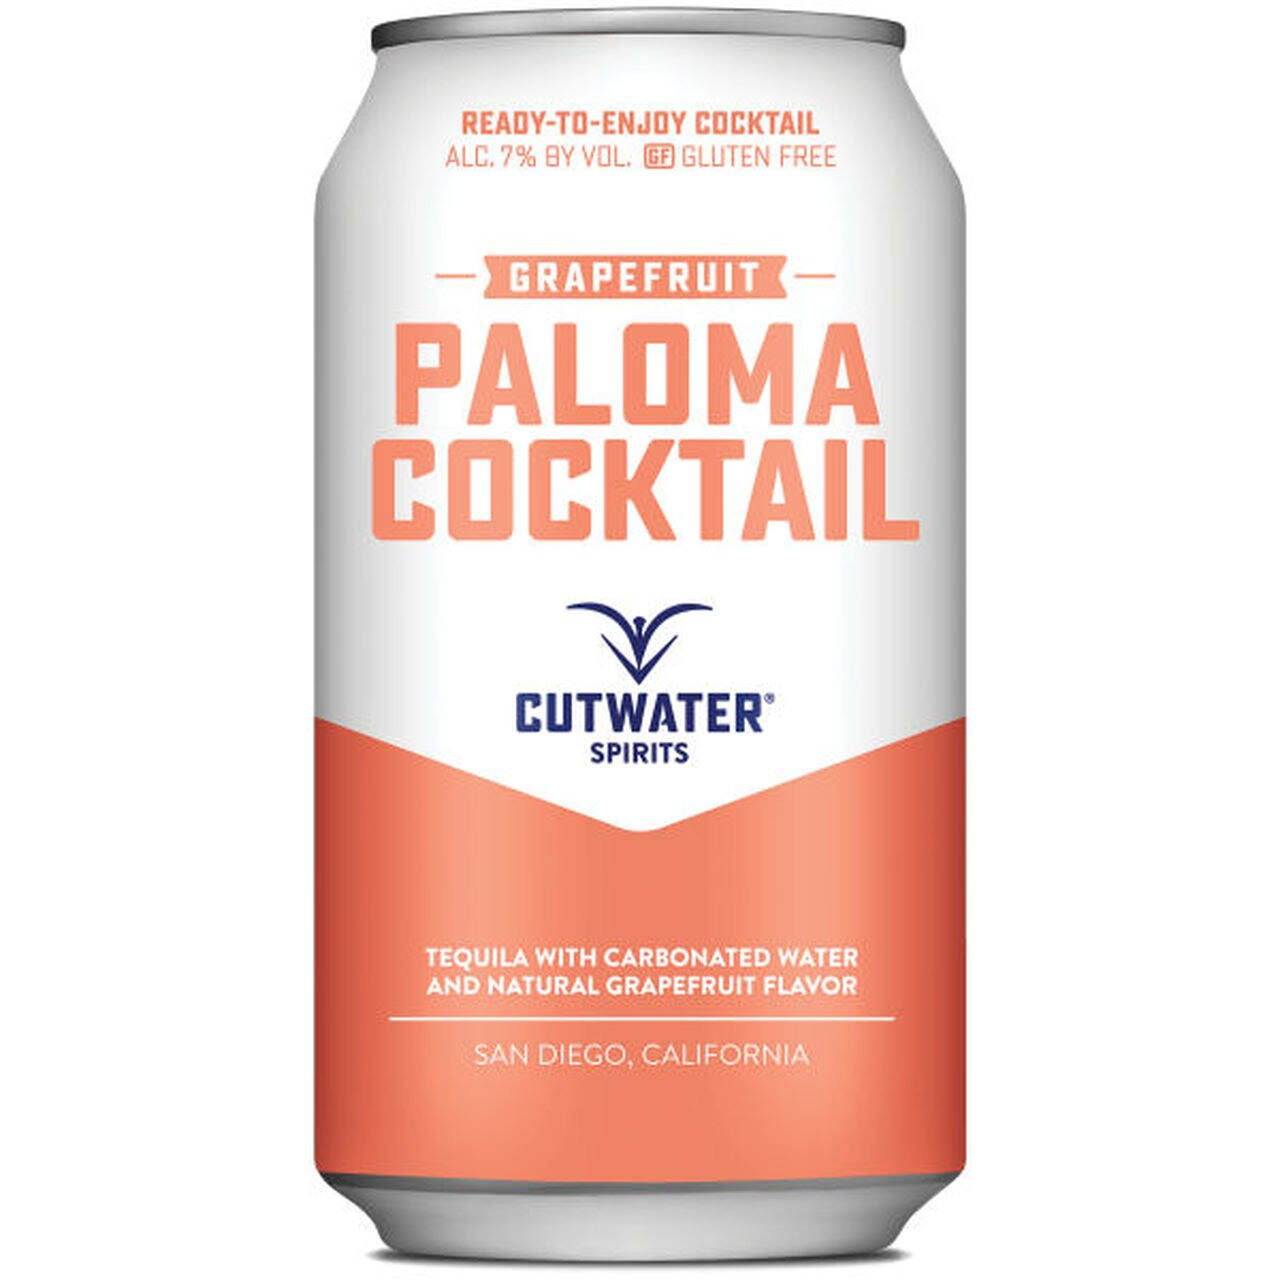 Cutwater Tequila Grapefruit Paloma